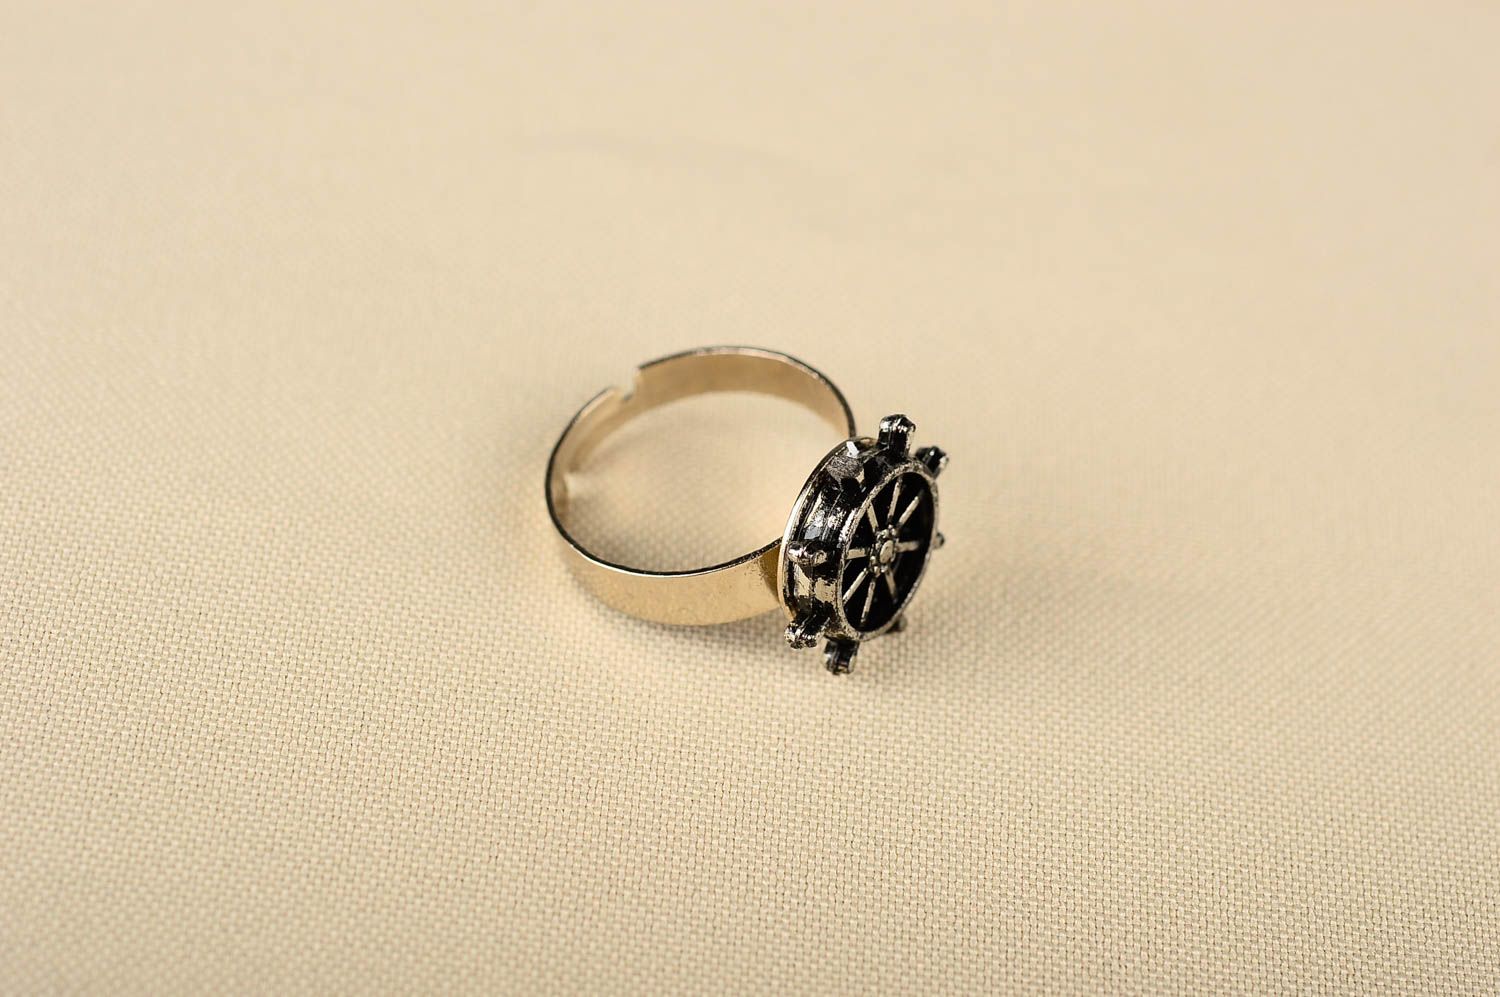 Handmade metal female ring jewelry in marine style designer accessory photo 1